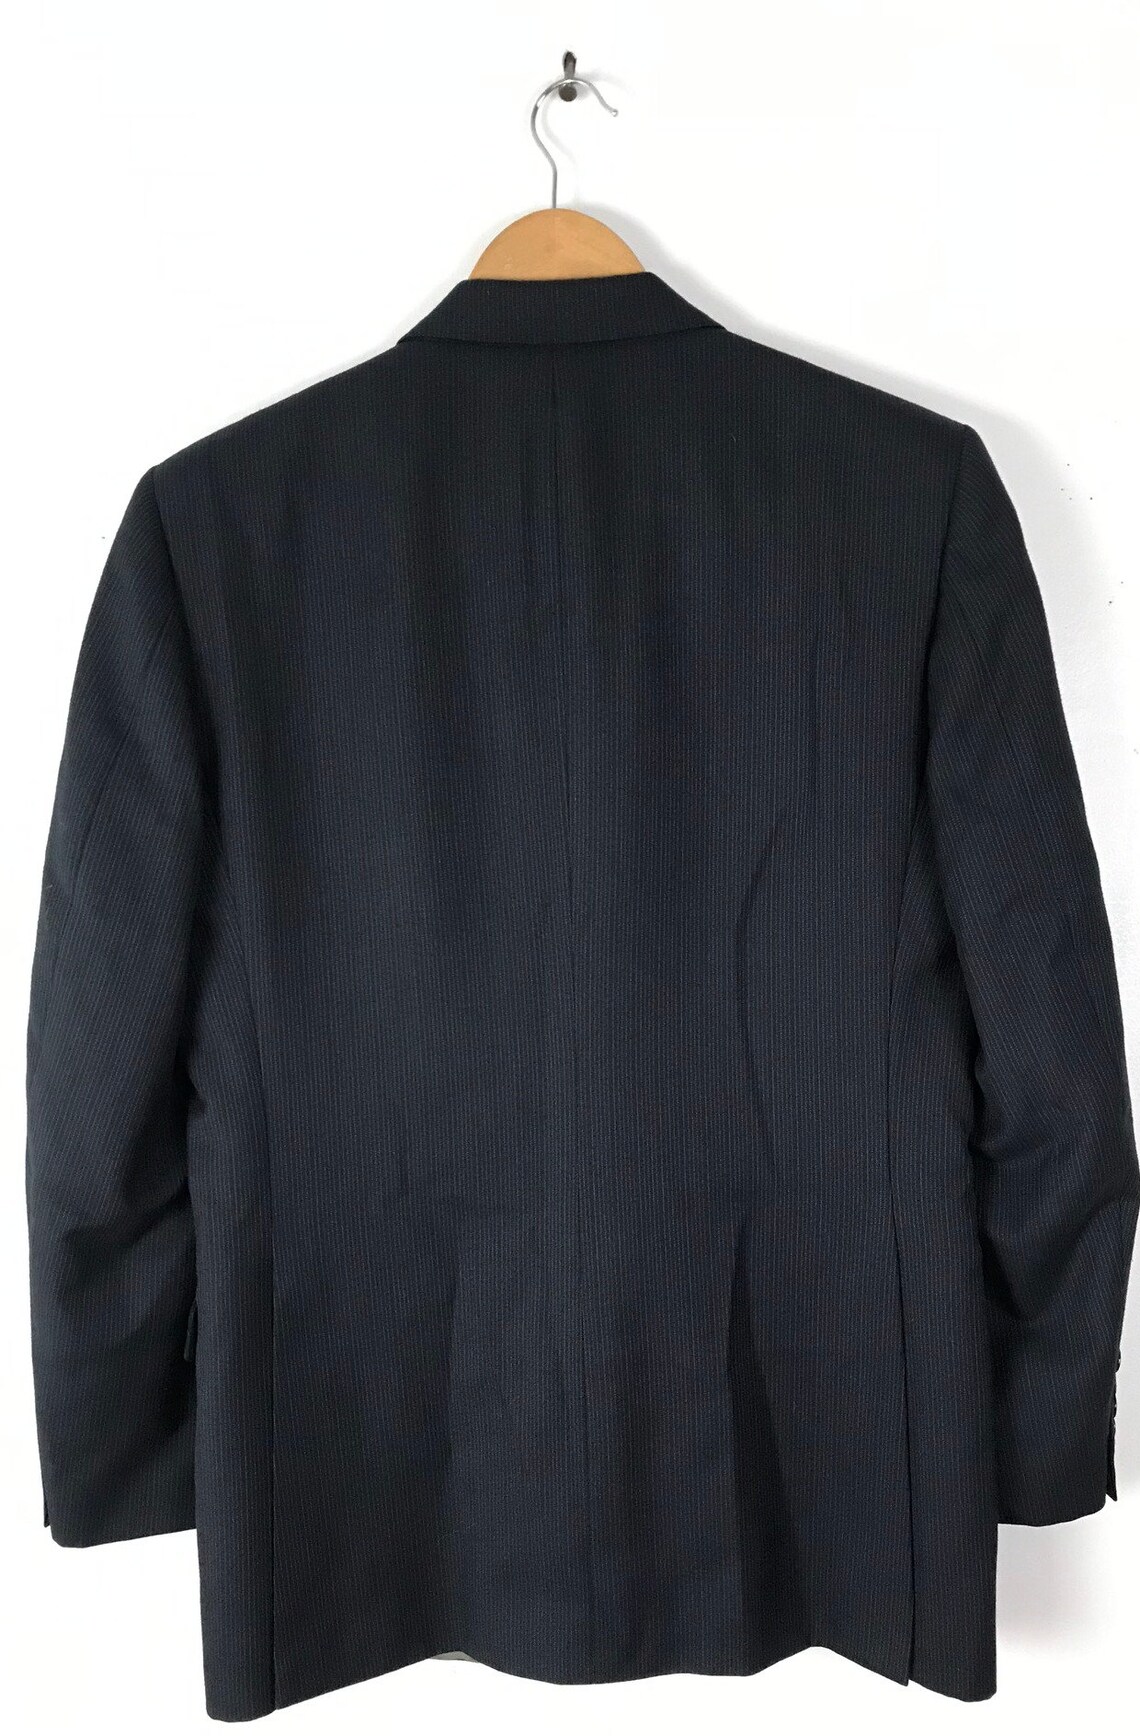 Vintage Pierre Cardin Suit Black Pinstriped Three Piece Suit | Etsy